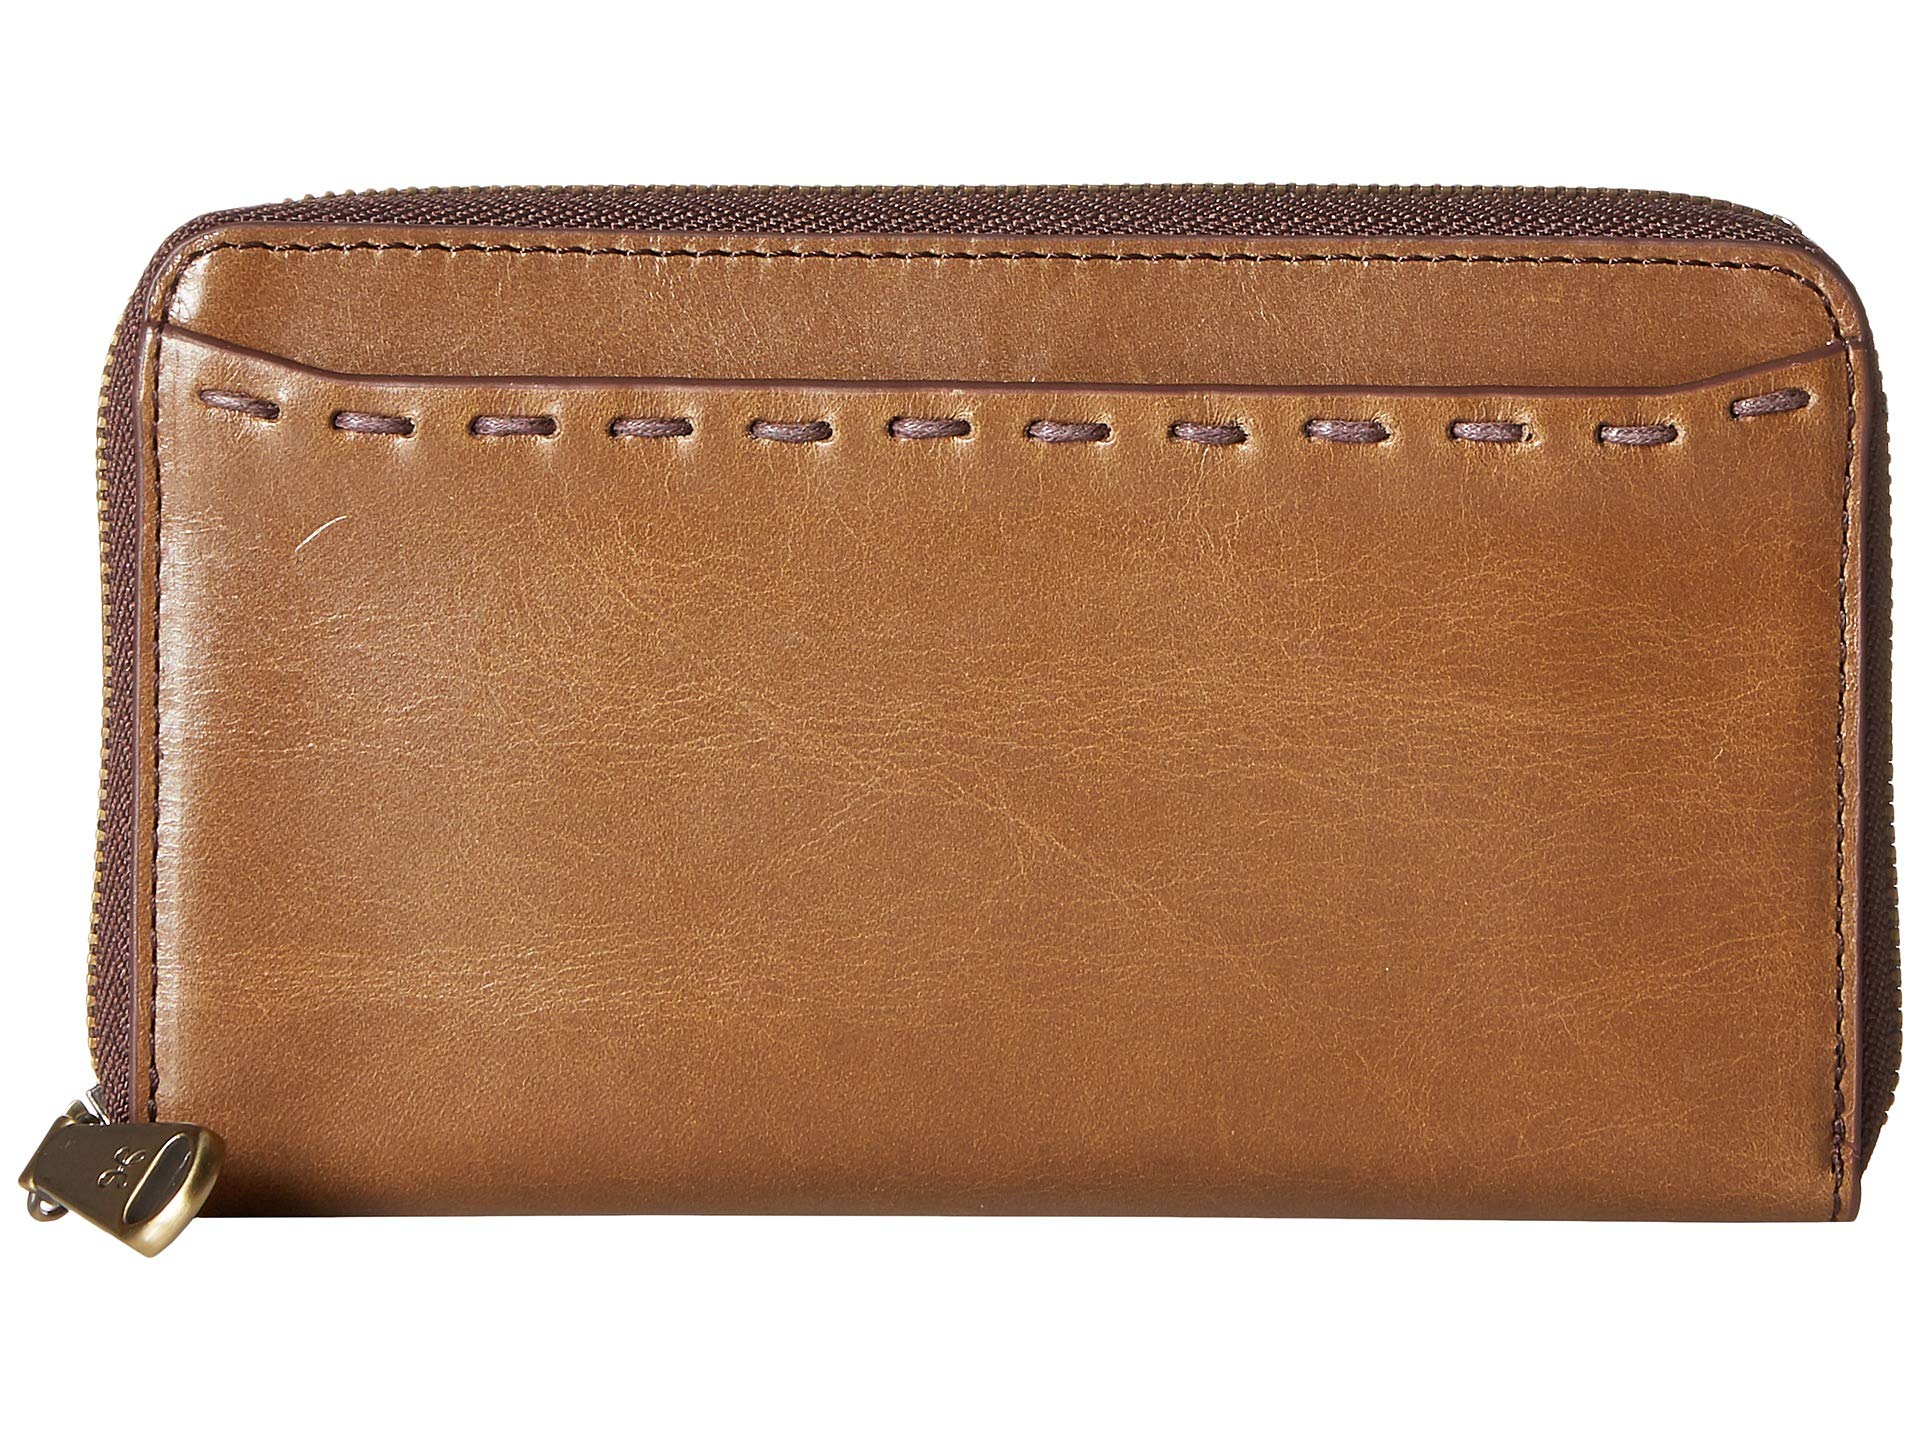 Hobo International Leather Honor Zip Around Compact Clutch Wallet Mink